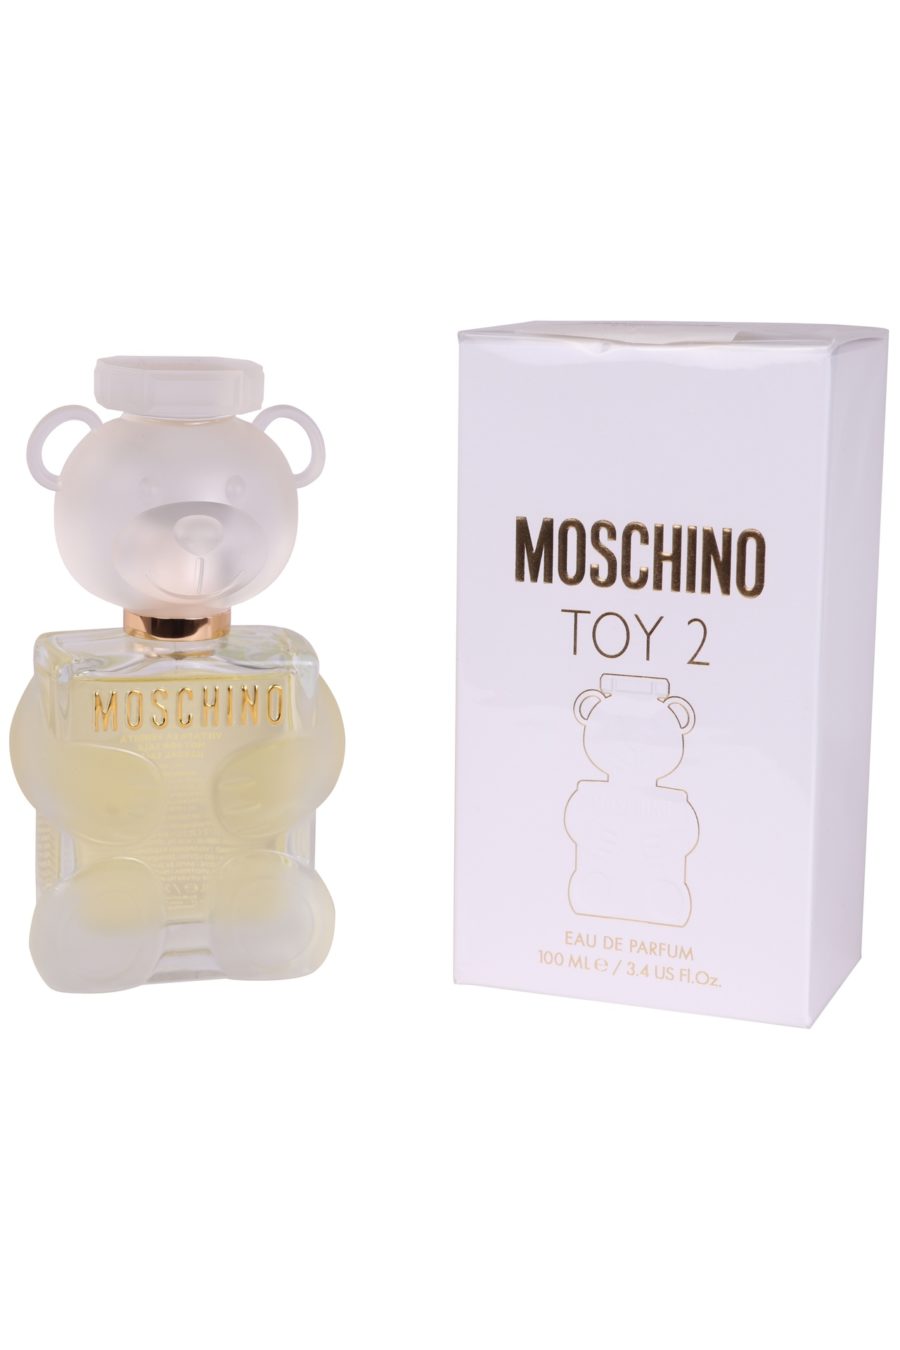 Parfum Moschino Toy 2 100 ml - e3d70ed752b5719037fd1862bd4df4873b6843c3